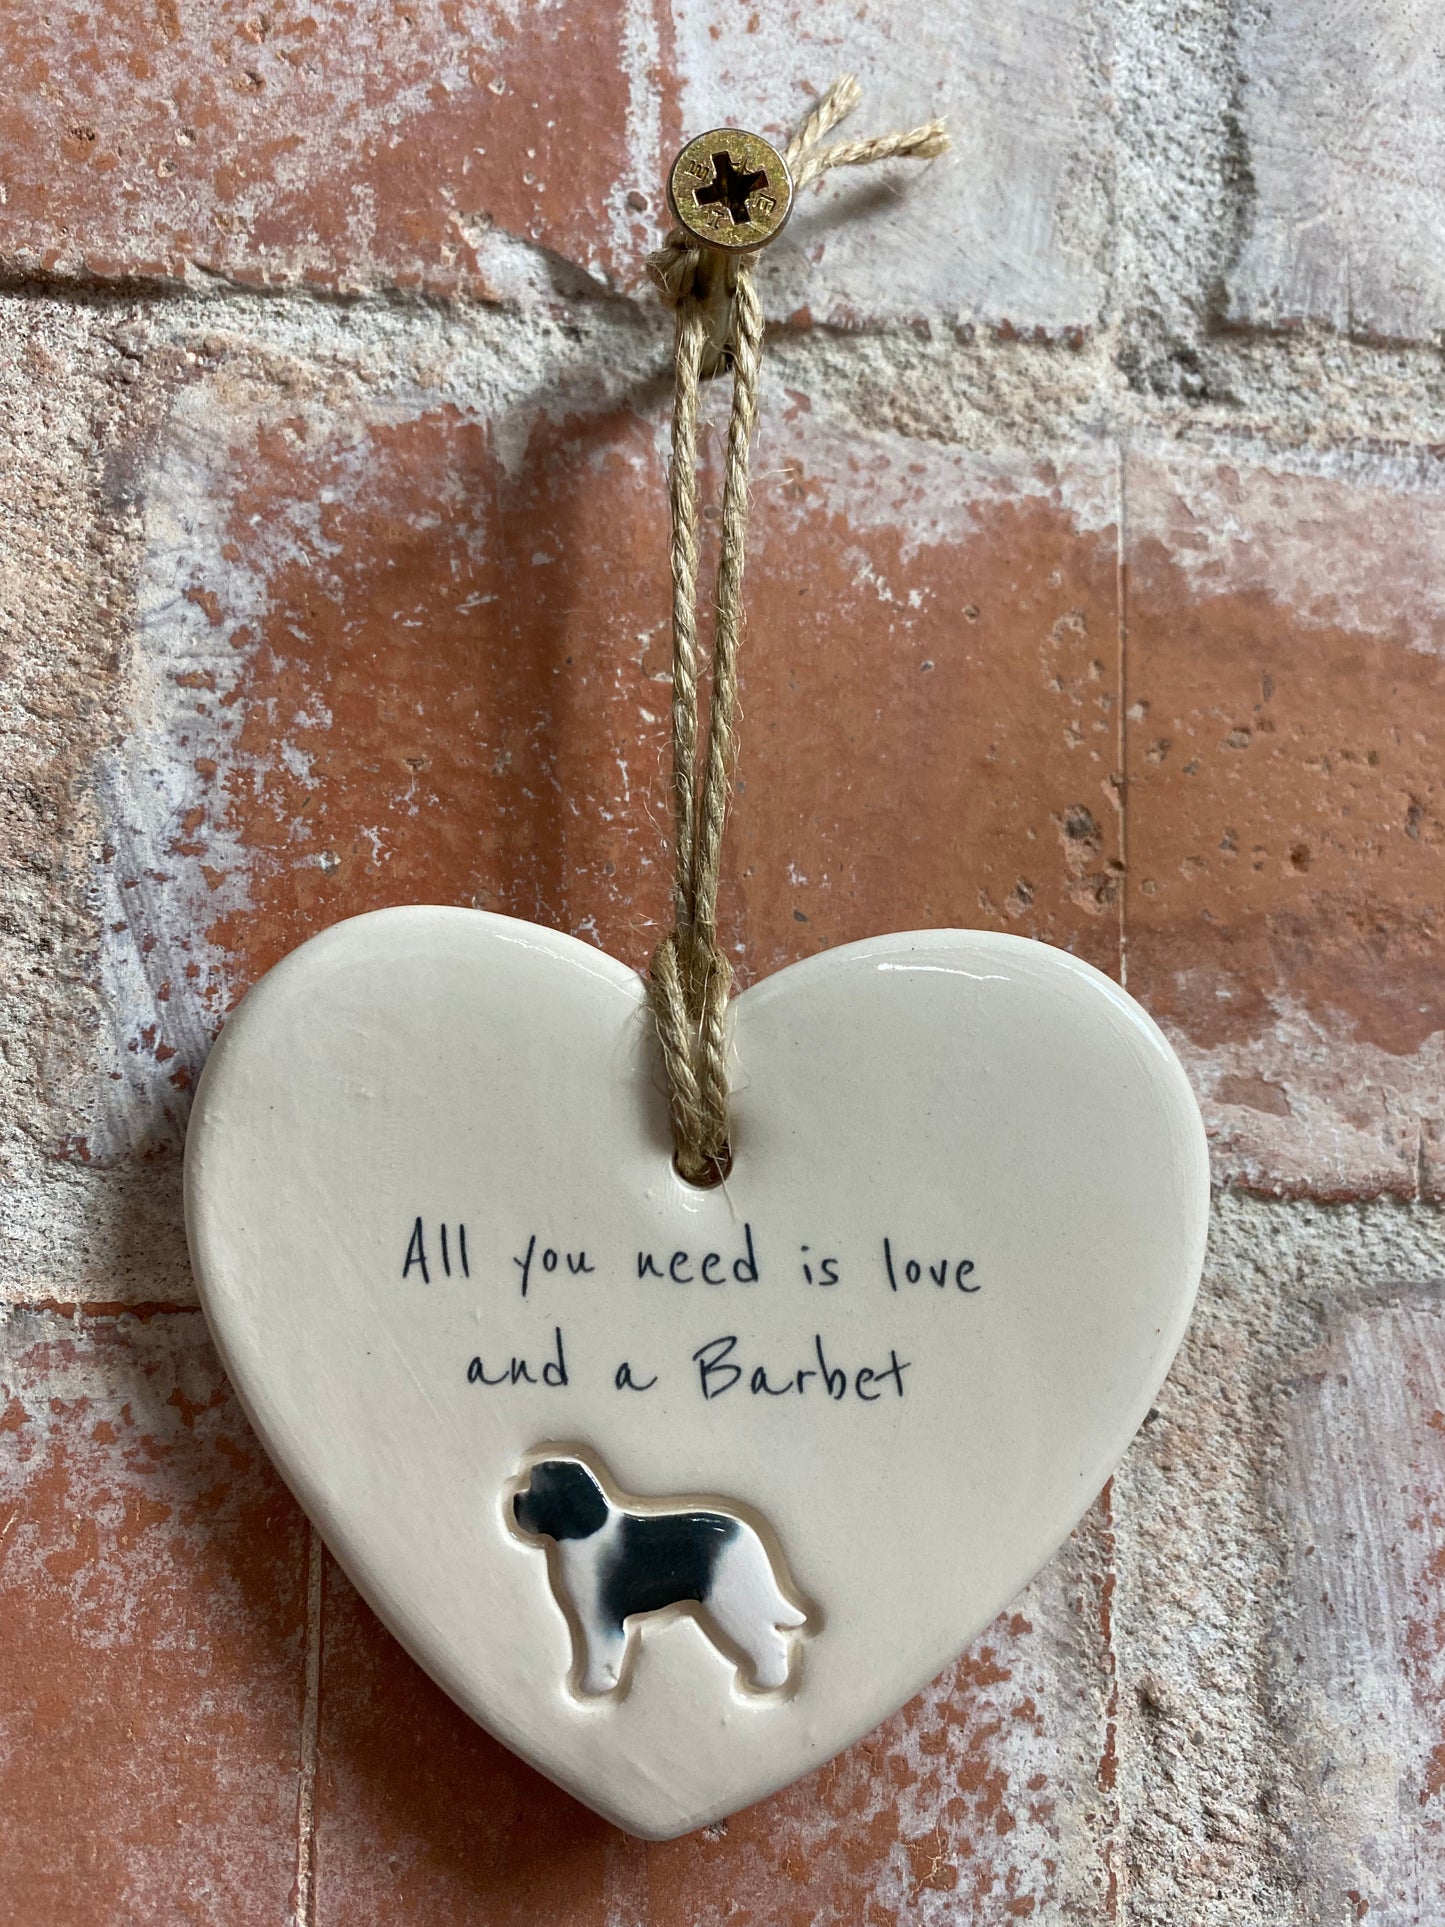 Barbet ceramic heart